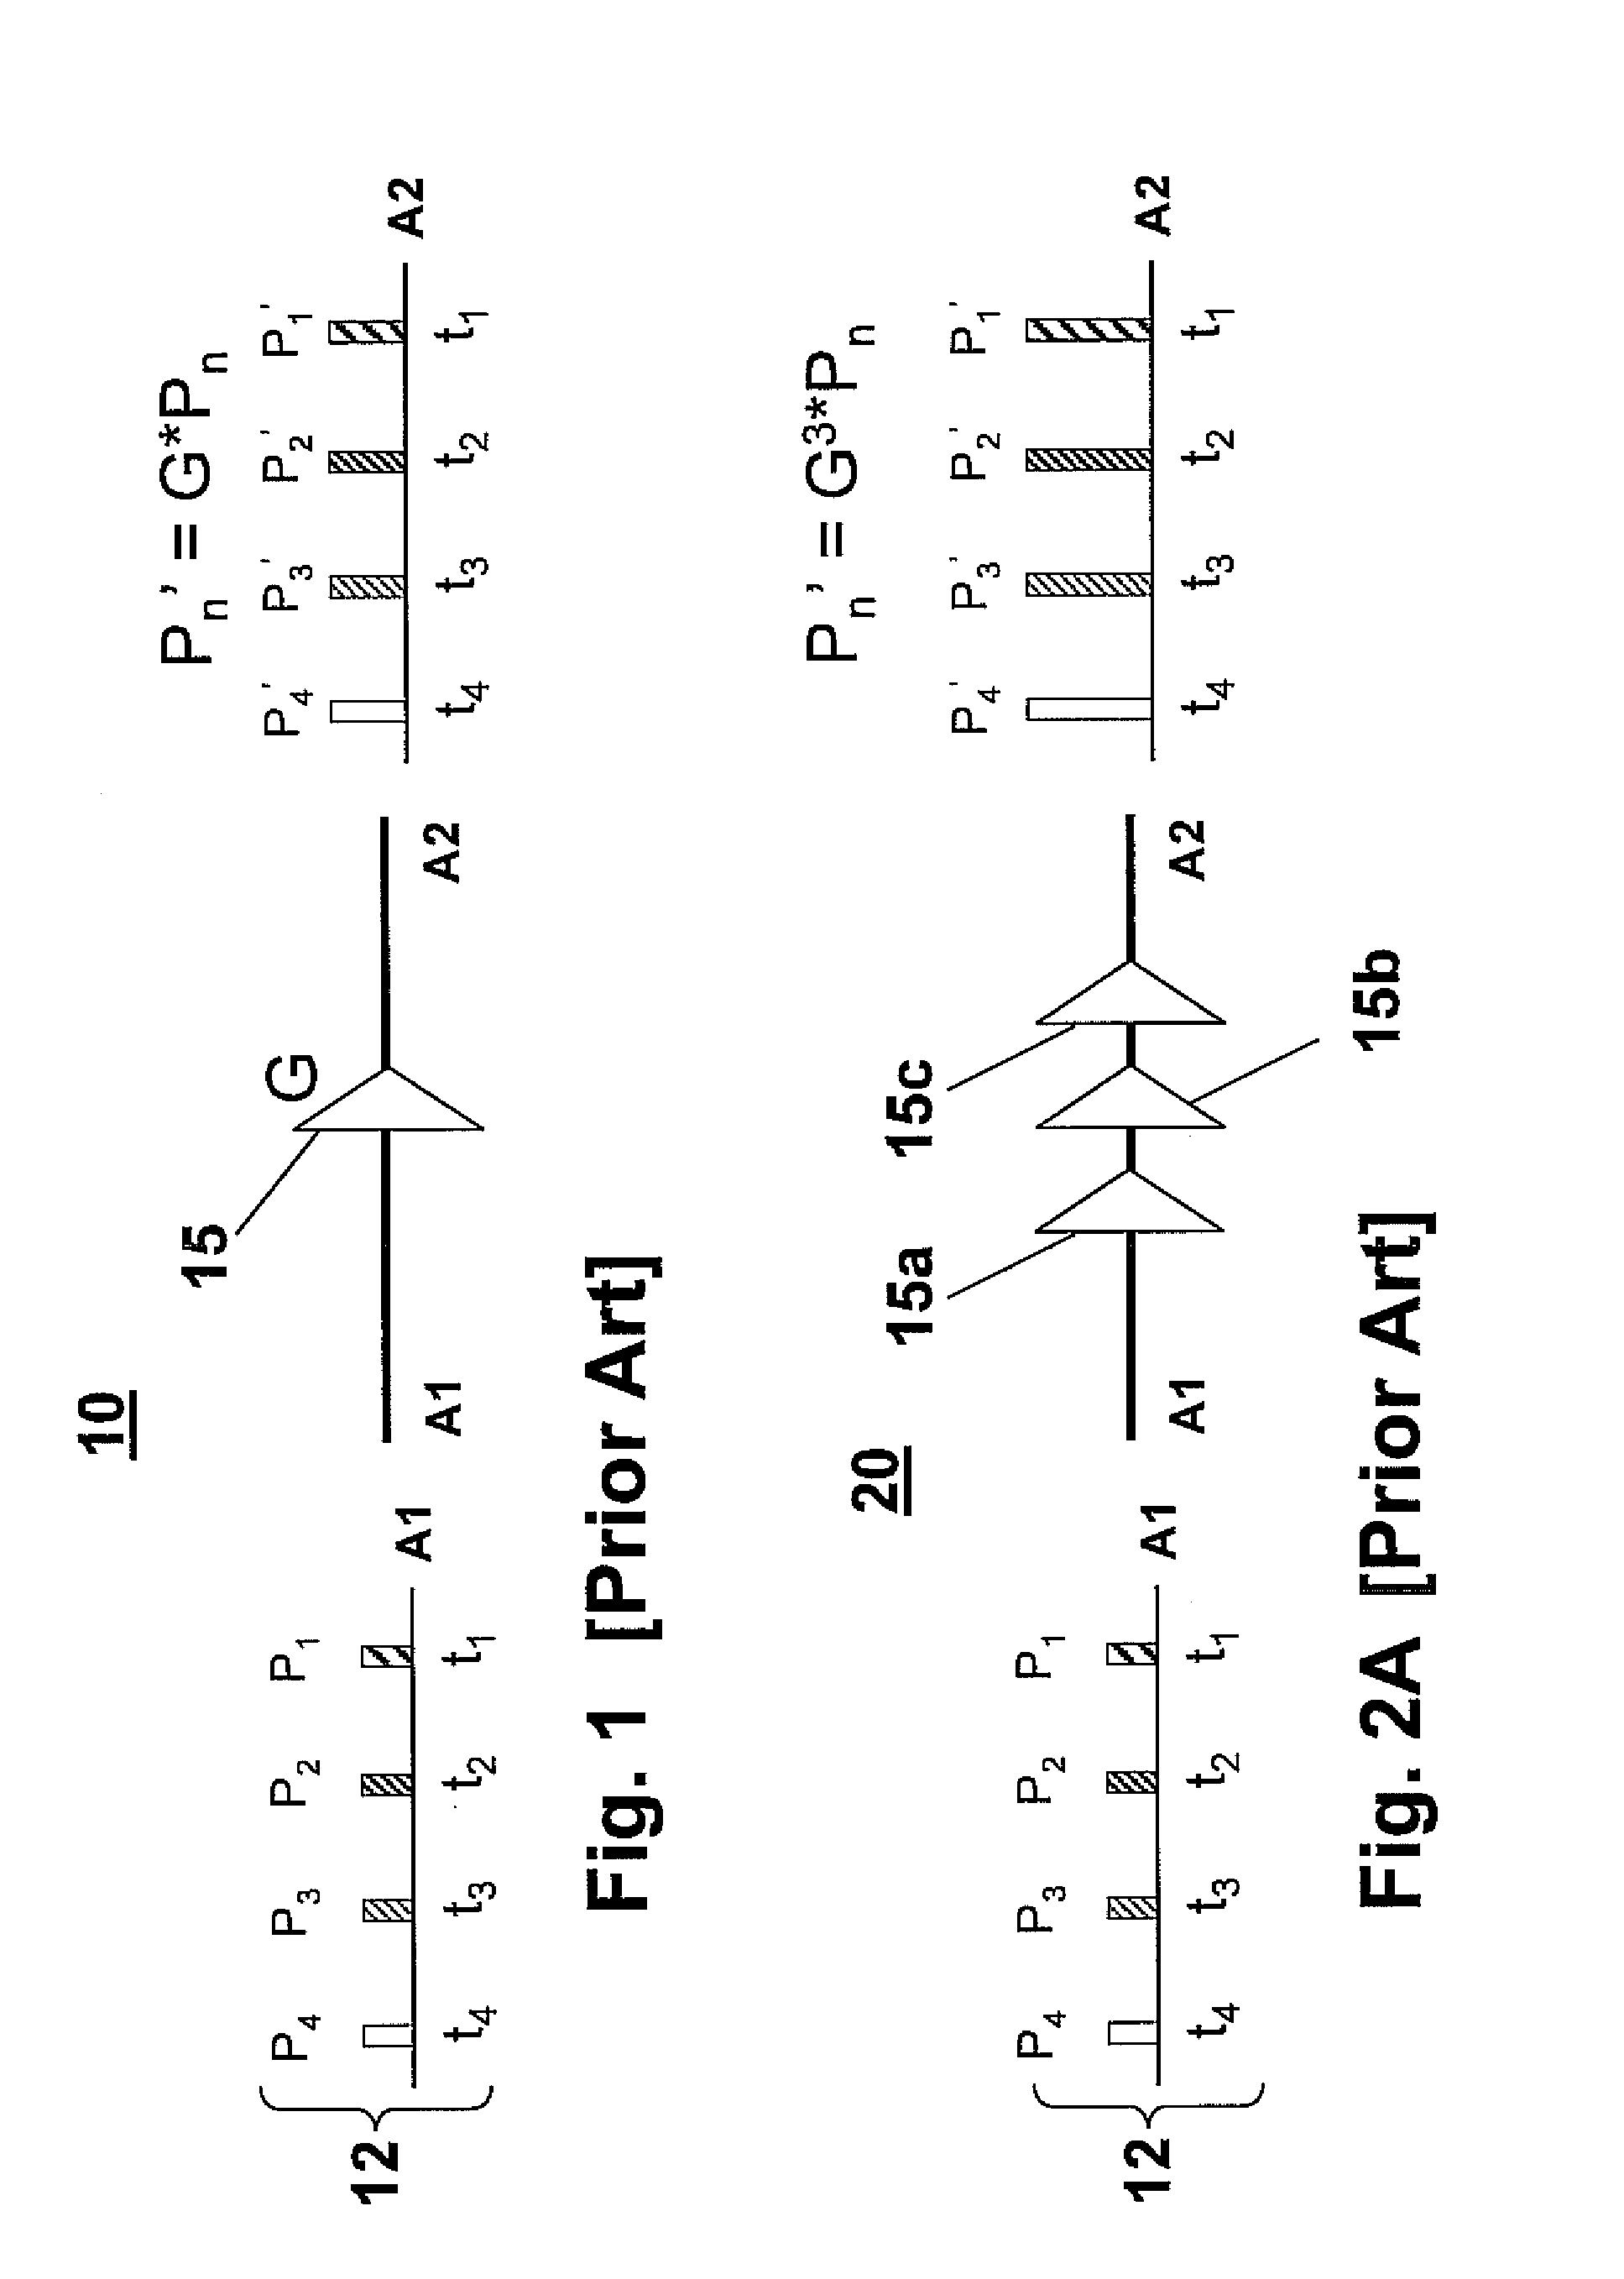 Optical pulse amplication apparatus and method